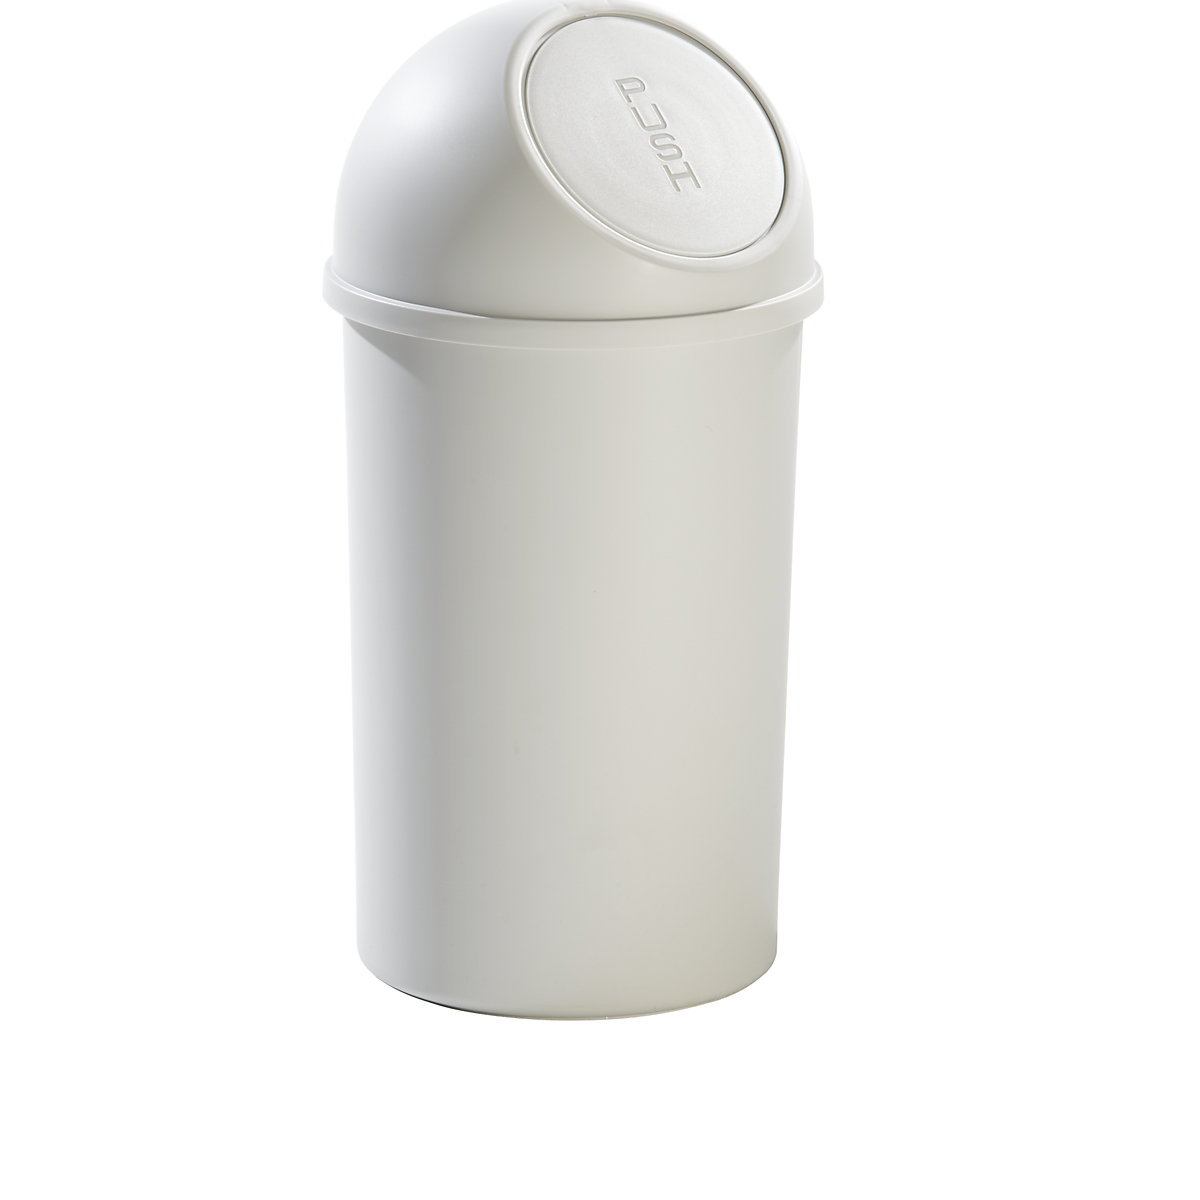 Recipiente de lixo Push em plástico – helit, capacidade 25 l, embalagem de 3 unid., AxØ 615 x 315 mm, cinzento claro-6